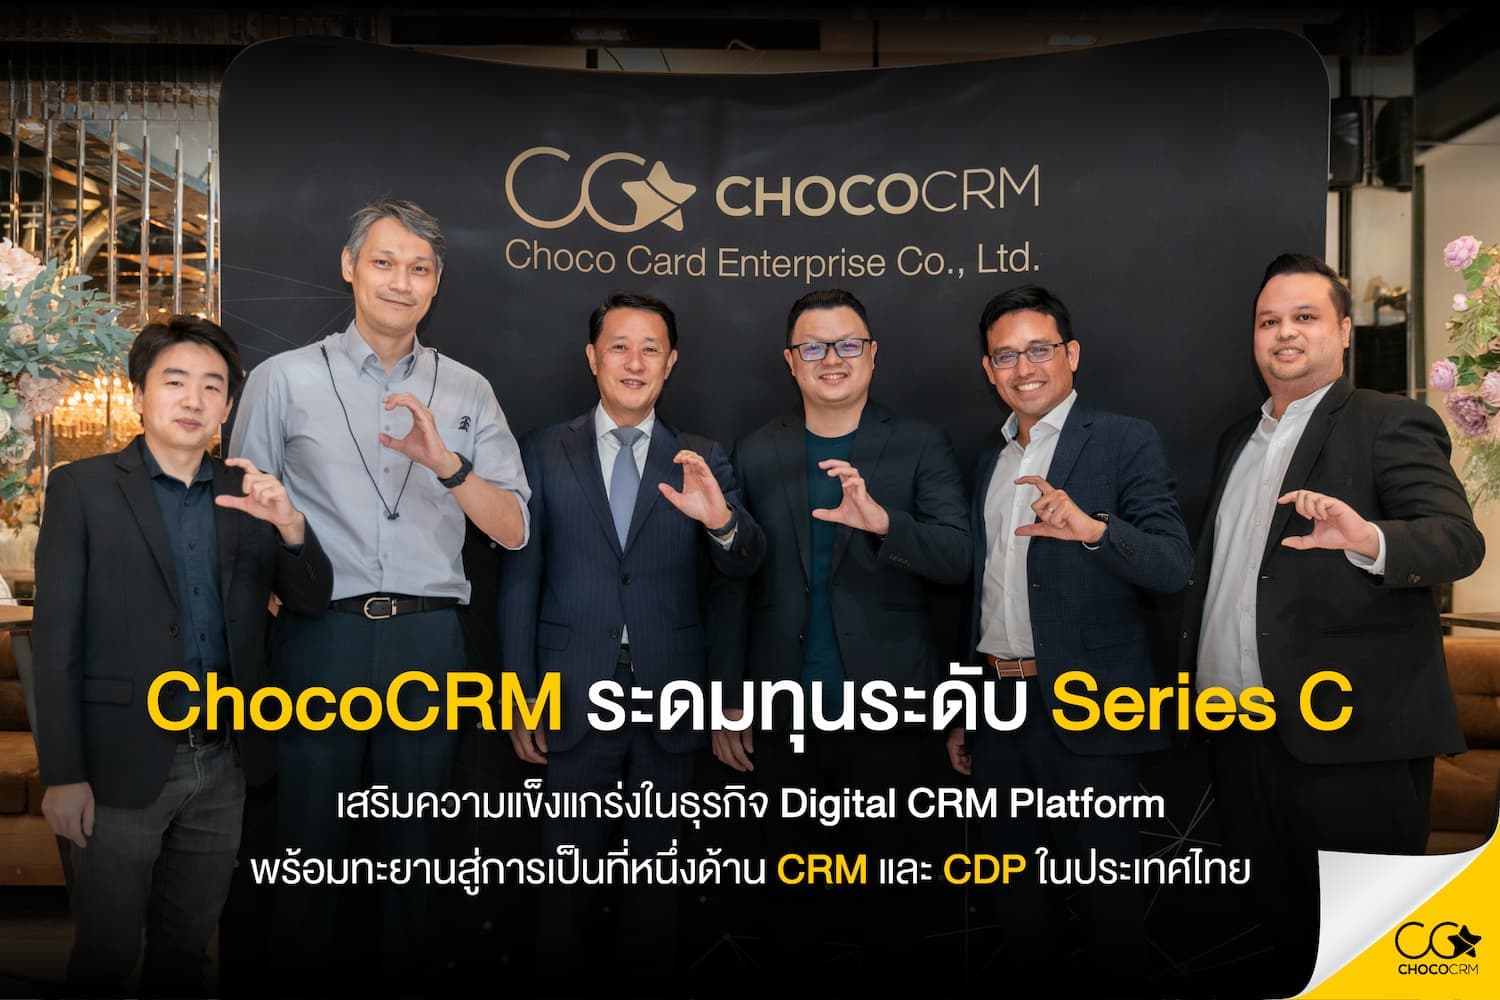 ChocoCRM ผนึกกำลัง 3 พาร์ทเนอร์ใหญ่ ร่วมทุนใน Series C มูลค่ากว่า 8 ล้านเหรียญสหรัฐ